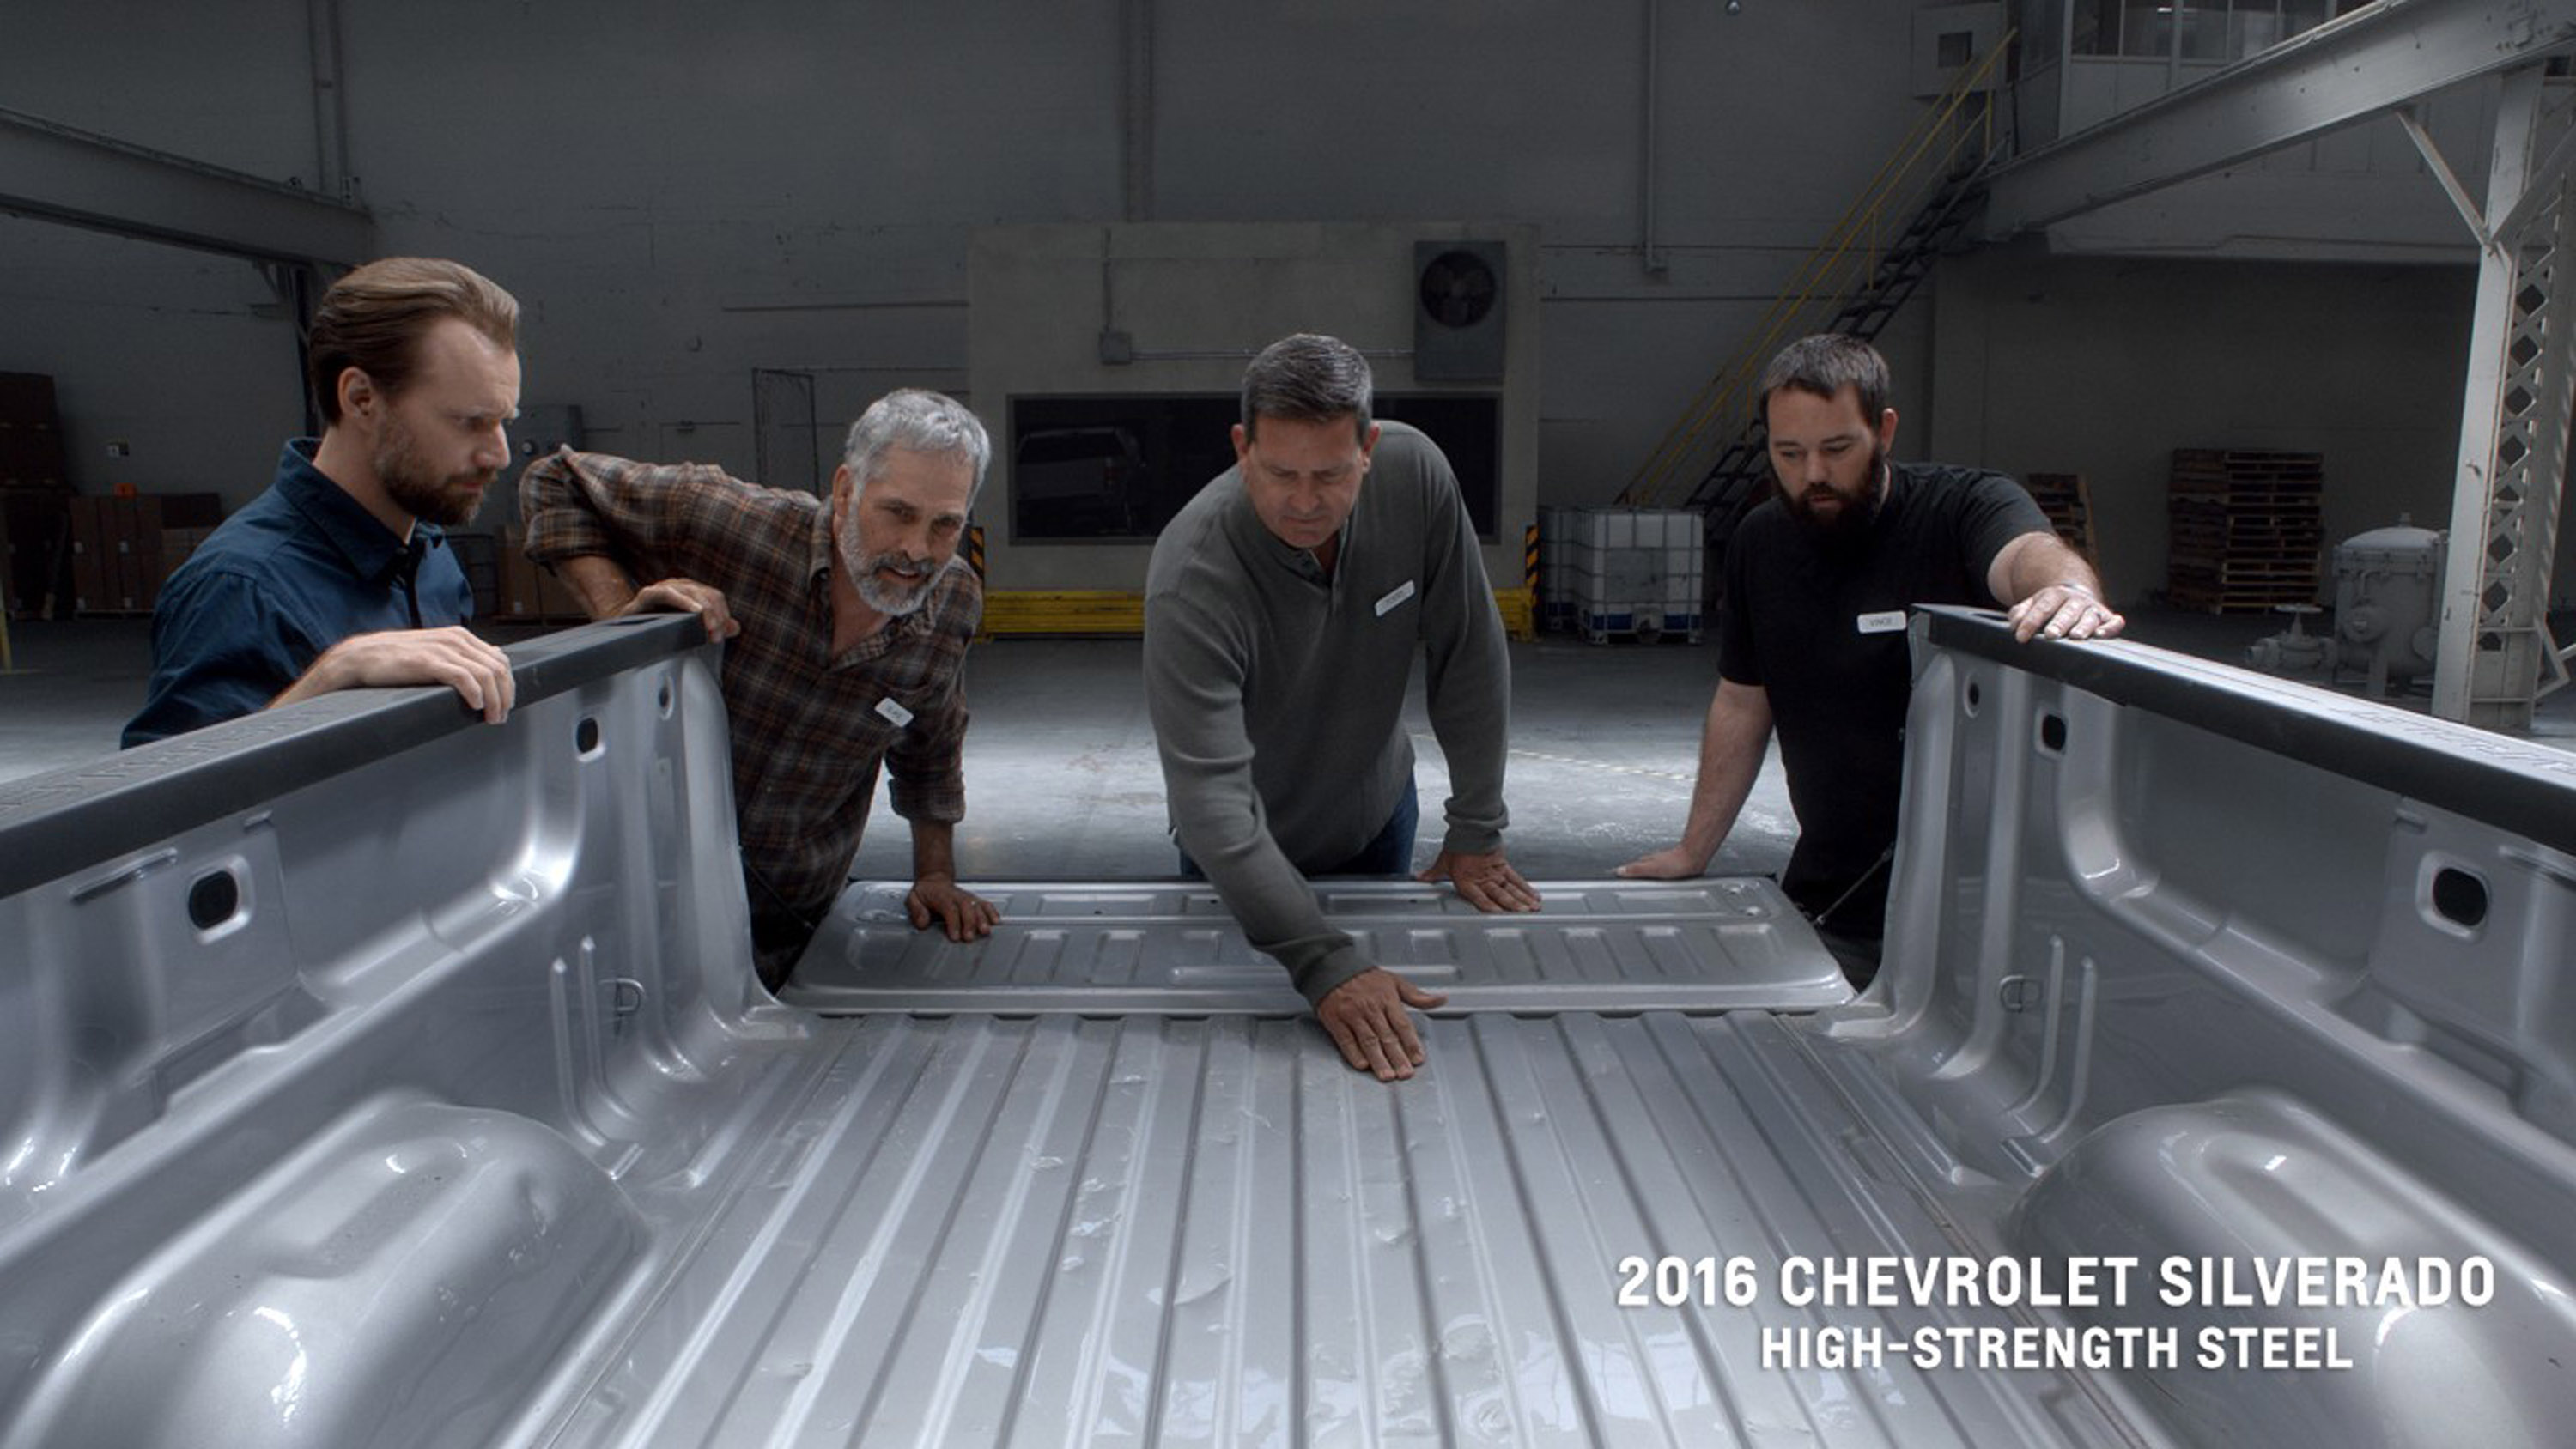 Chevrolet Silverado strenght tests